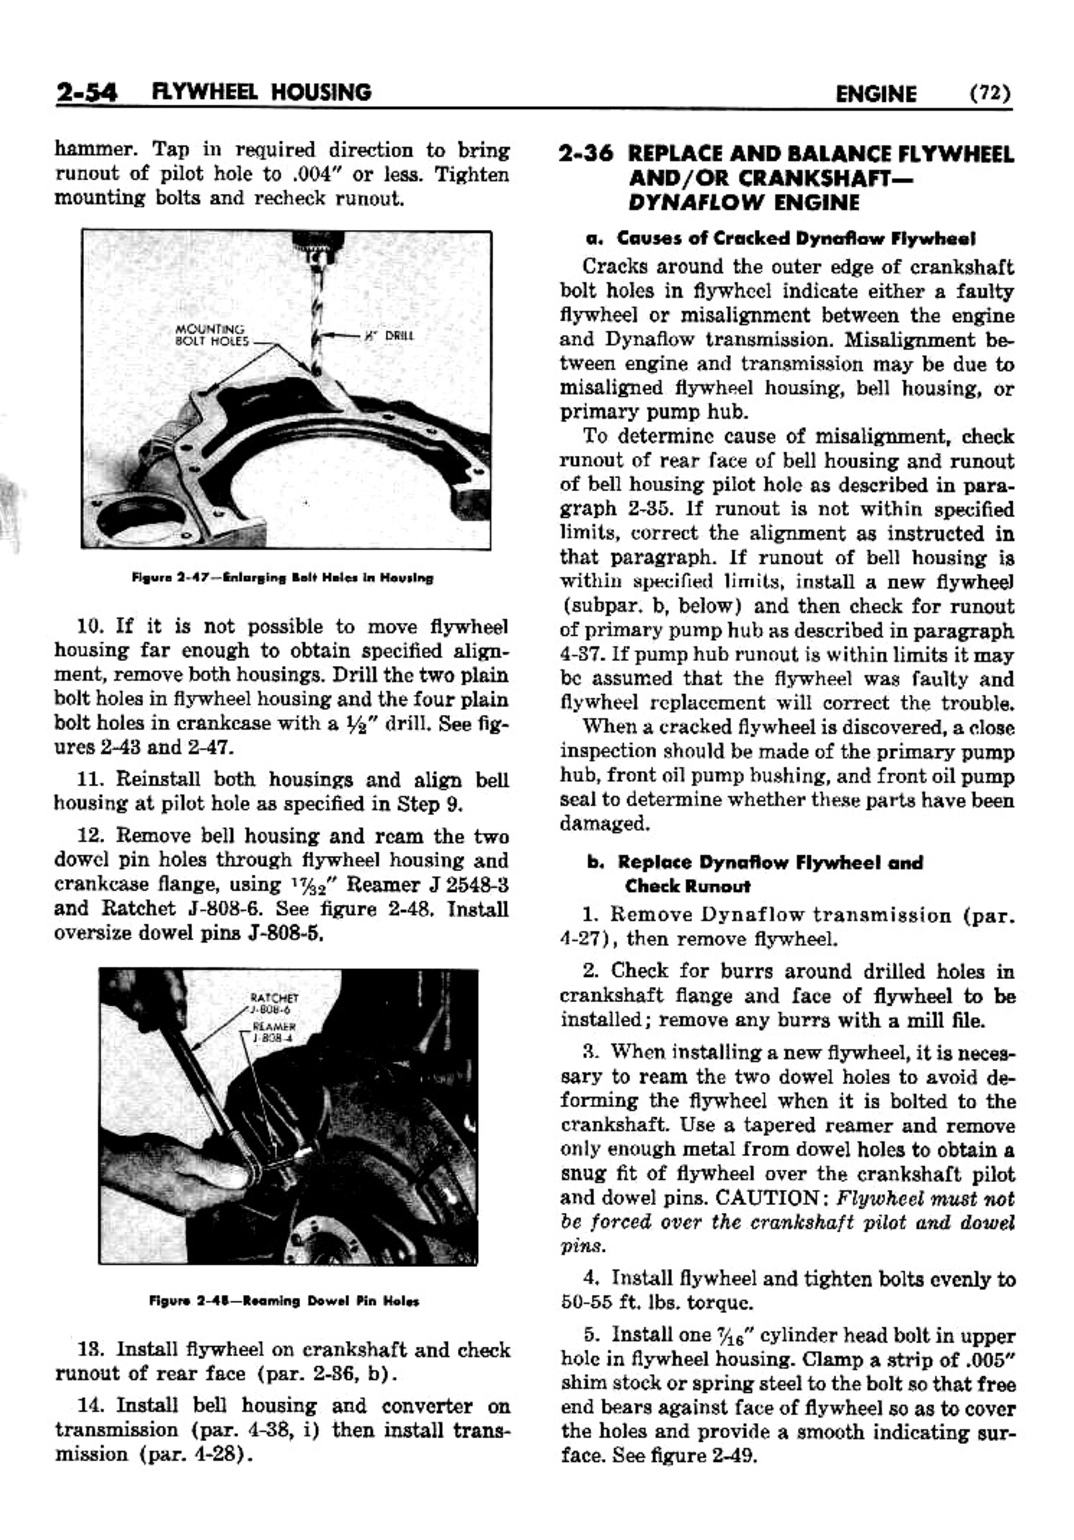 n_03 1952 Buick Shop Manual - Engine-054-054.jpg